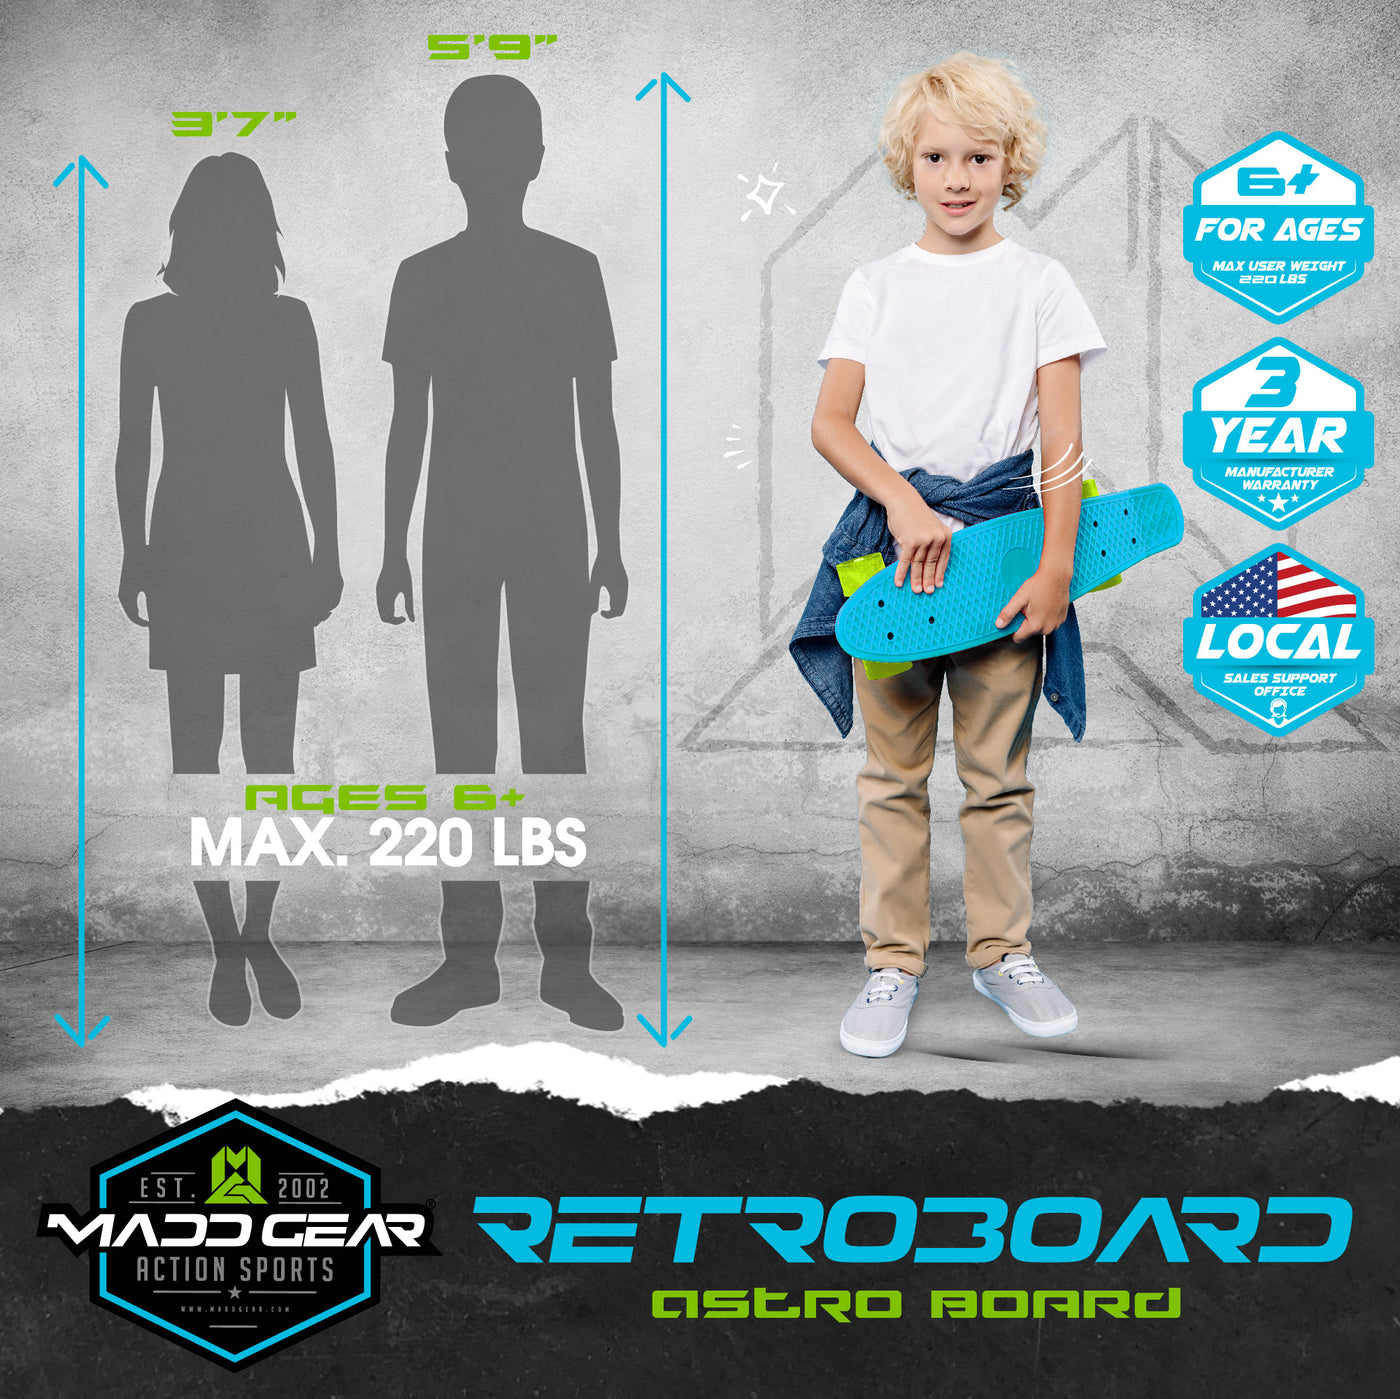 Madd Gear Retro Board Skateboard Penny 22" Plastic Flexible Kids Children Complete High Quality Blue Green Compact Skateboard